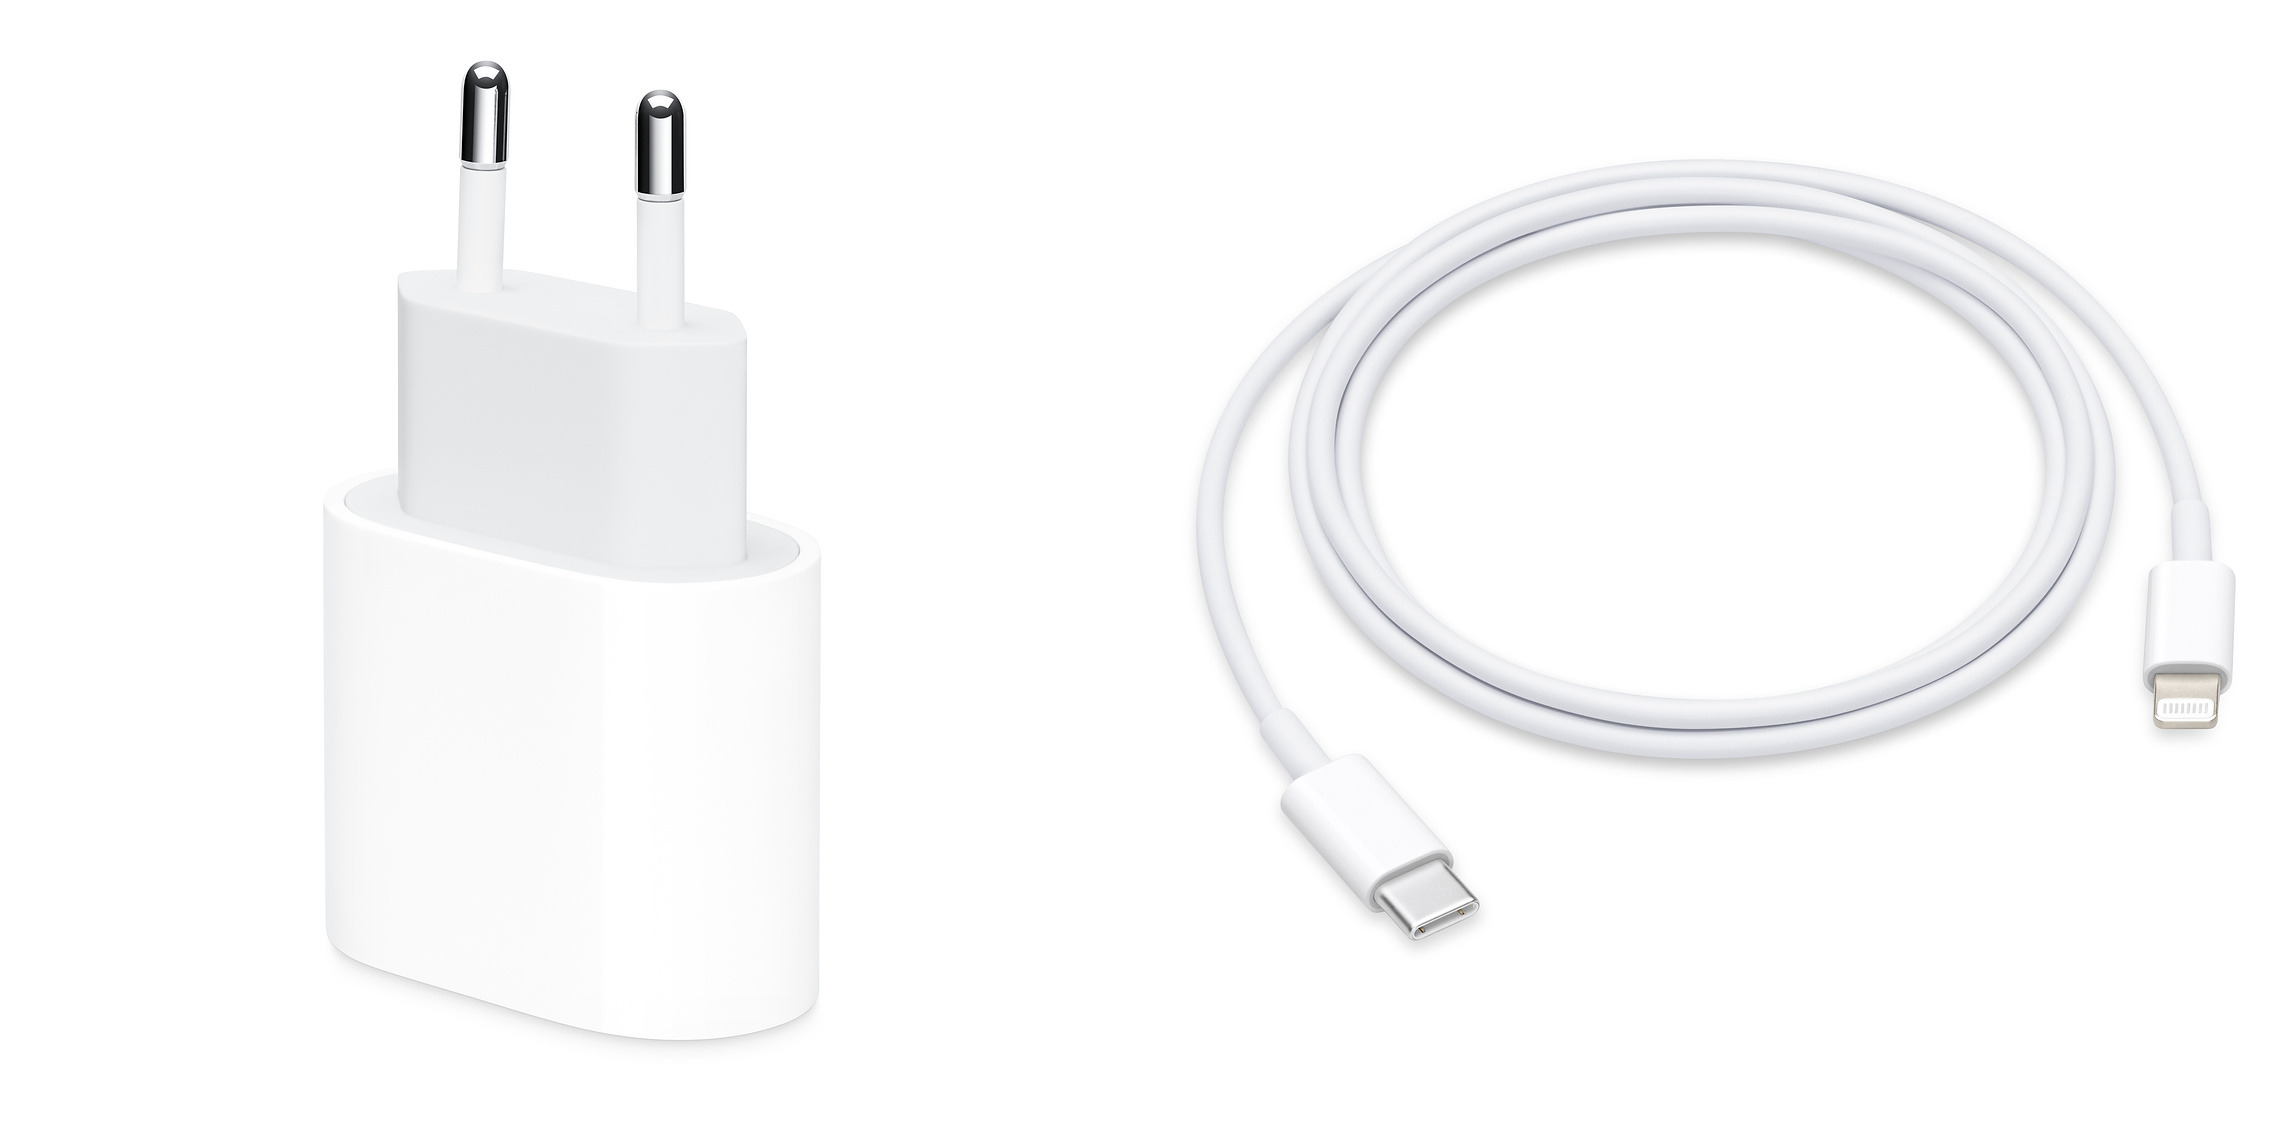 Зарядка для iphone 12 pro. Apple Adapter 20w USB-C. Зарядка iphone 18w. Apple 20w USB Power Adapter. Адаптер сетевой с кабелем [Apple] mhj83zm/a 20w 1usb-c + Type-c-Lightning (White).